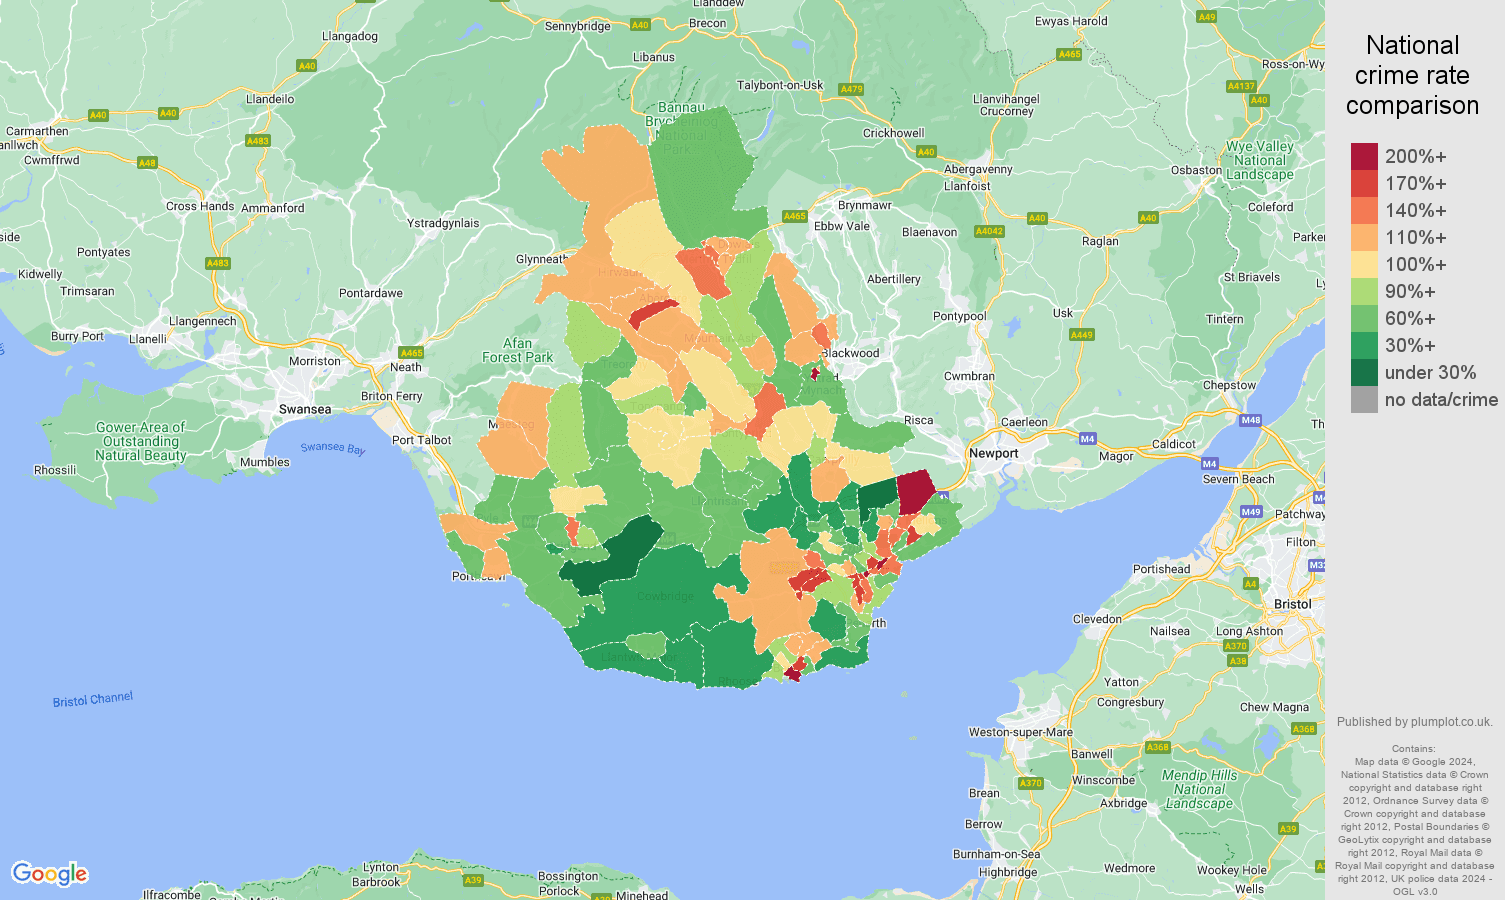 Cardiff crime rate comparison map